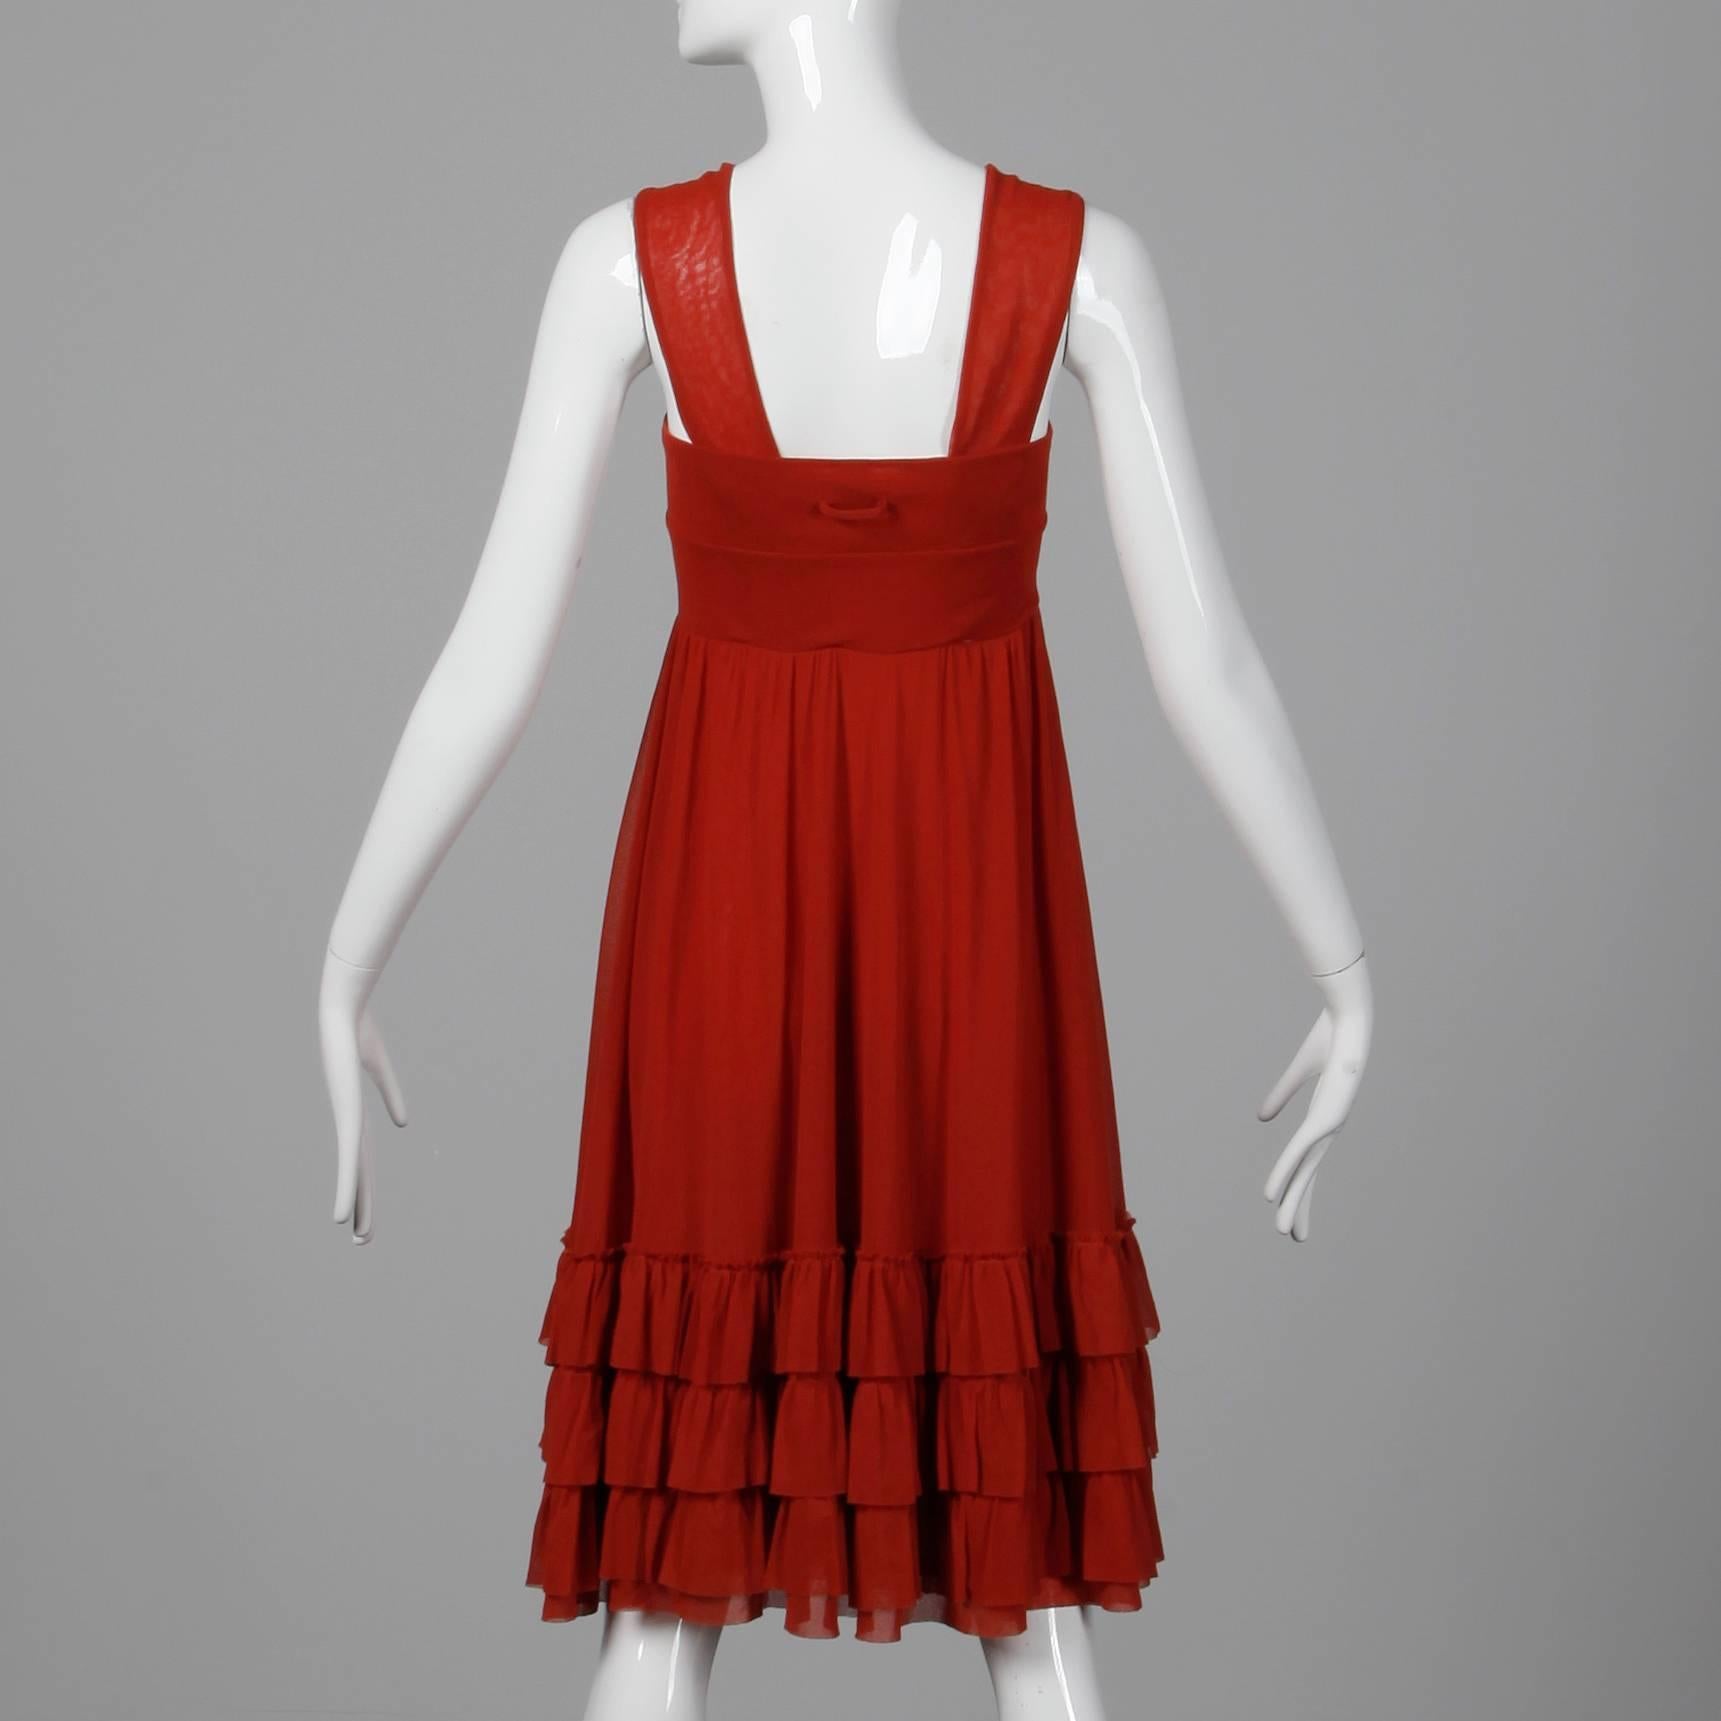 Jean Paul Gaultier Brick Red Mesh Dress with Ruffled Hemline 1